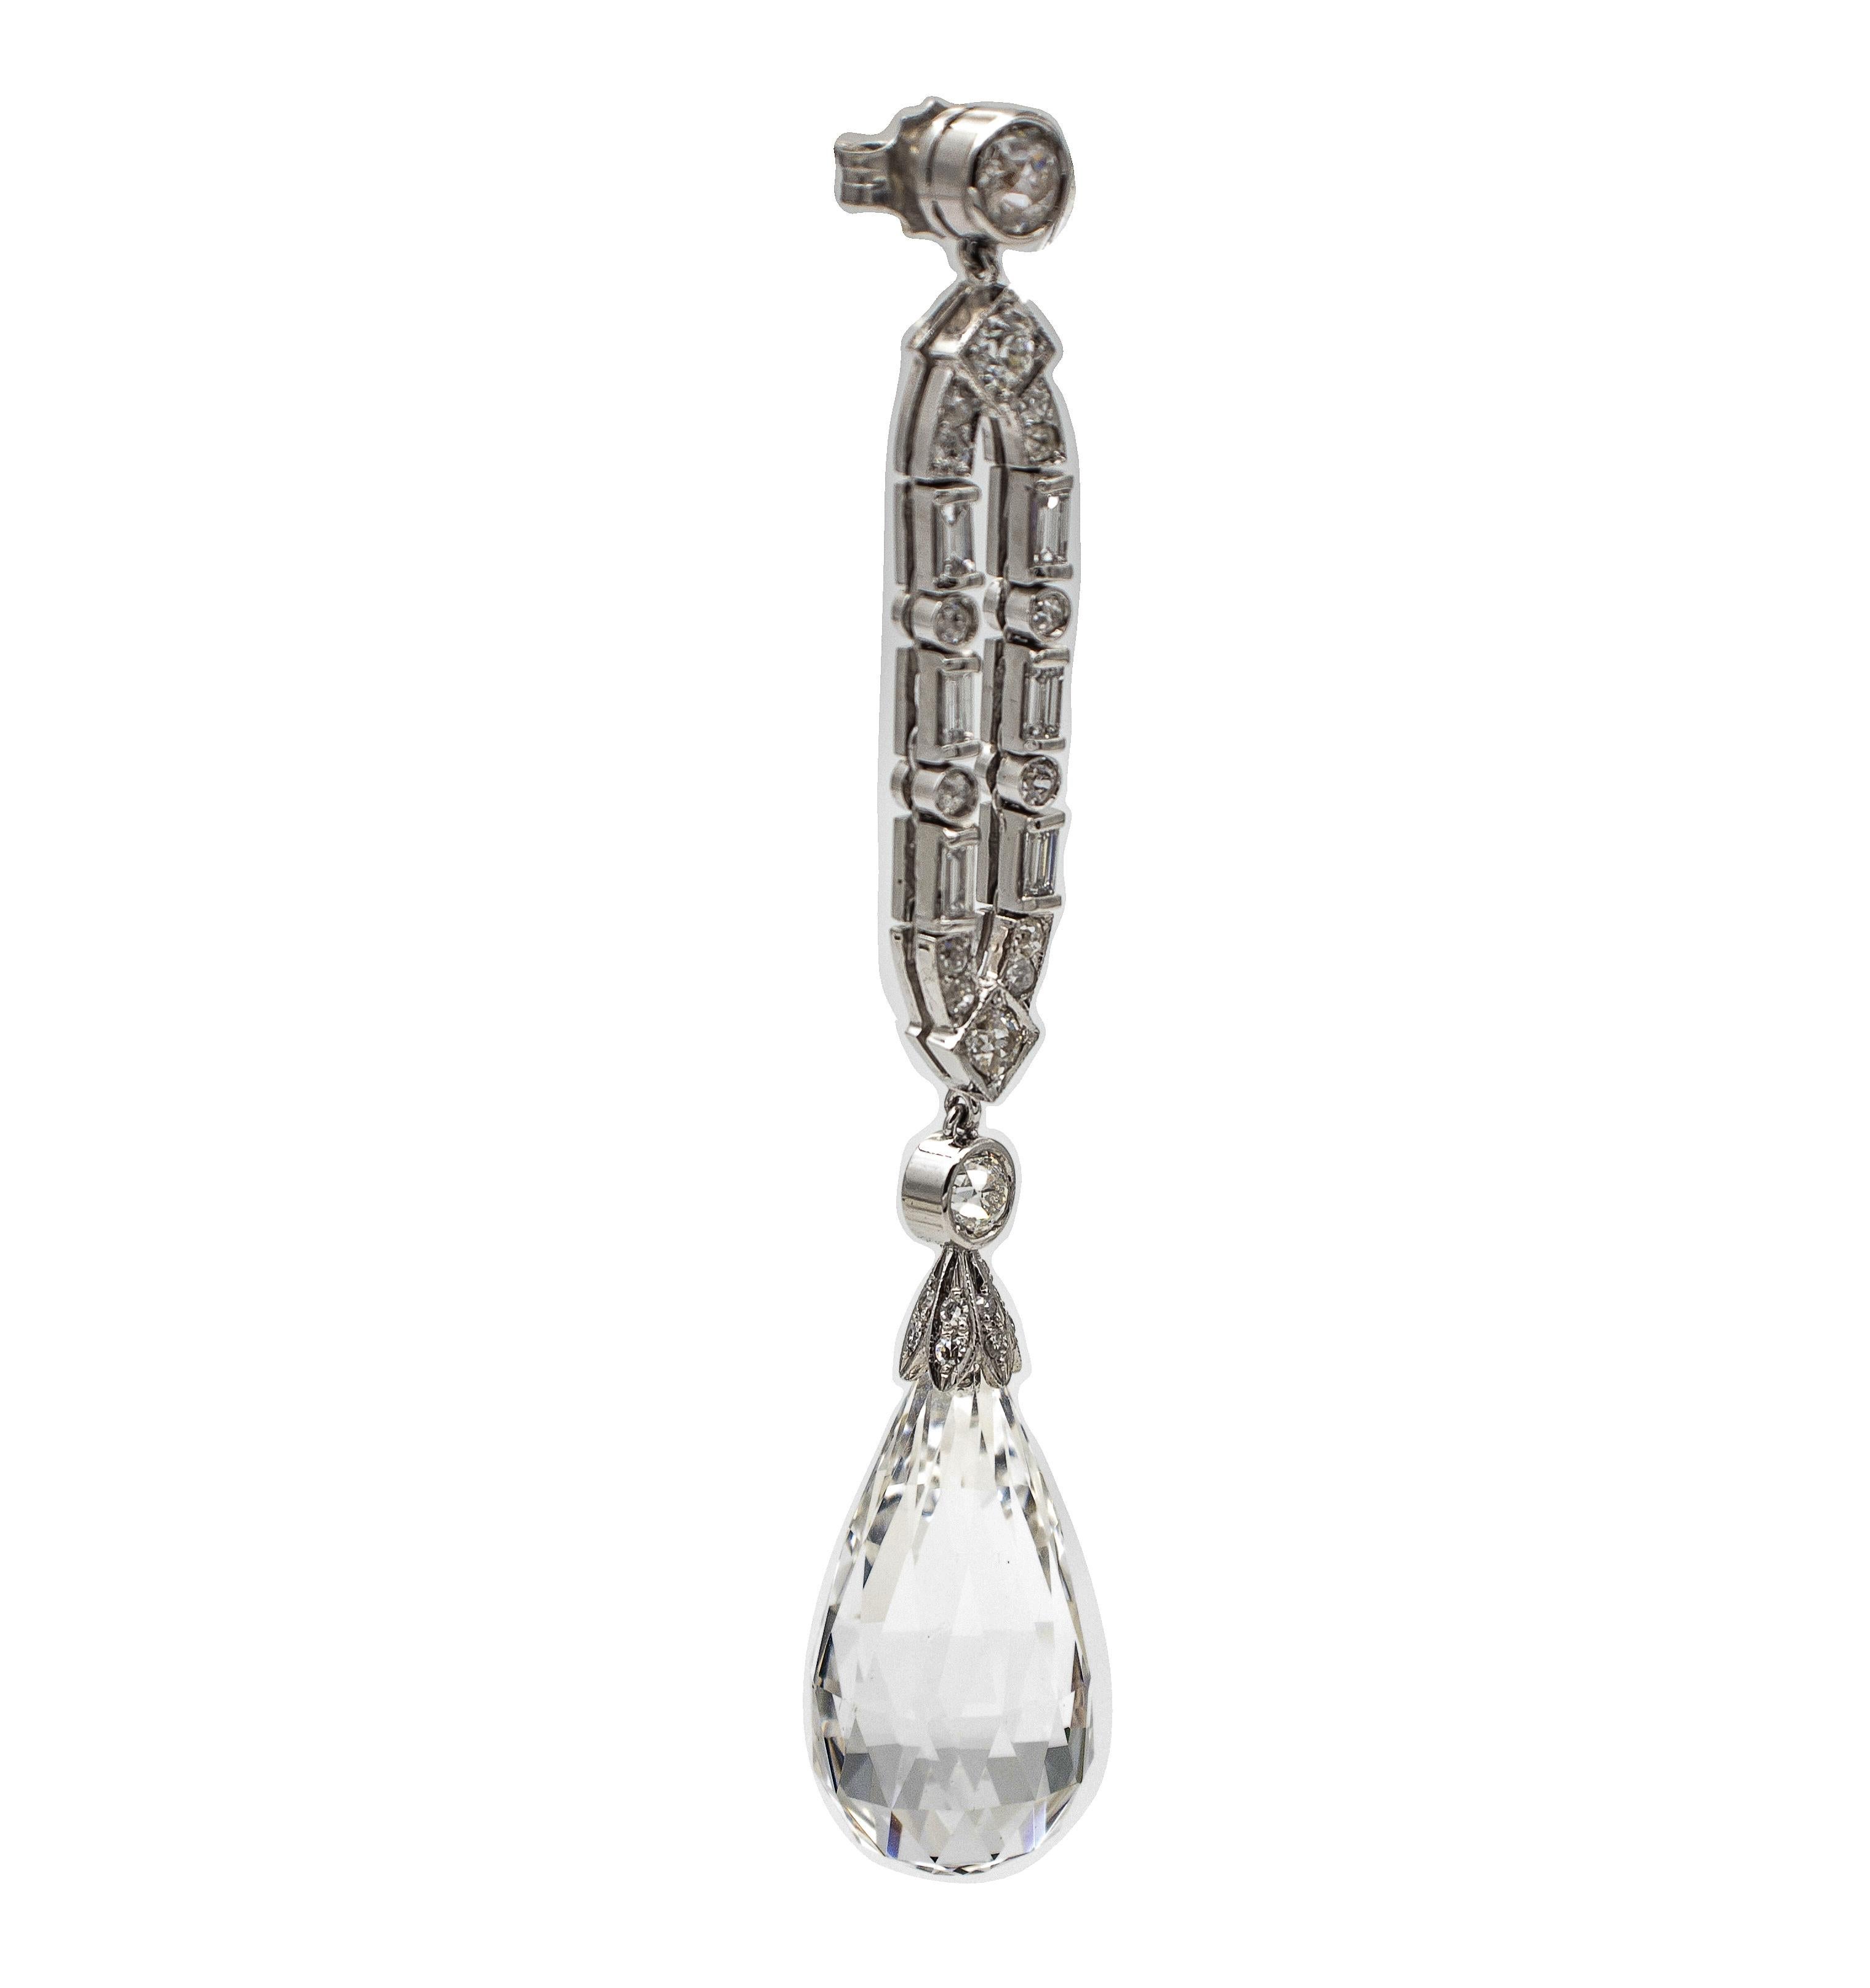 long crystal drop earrings